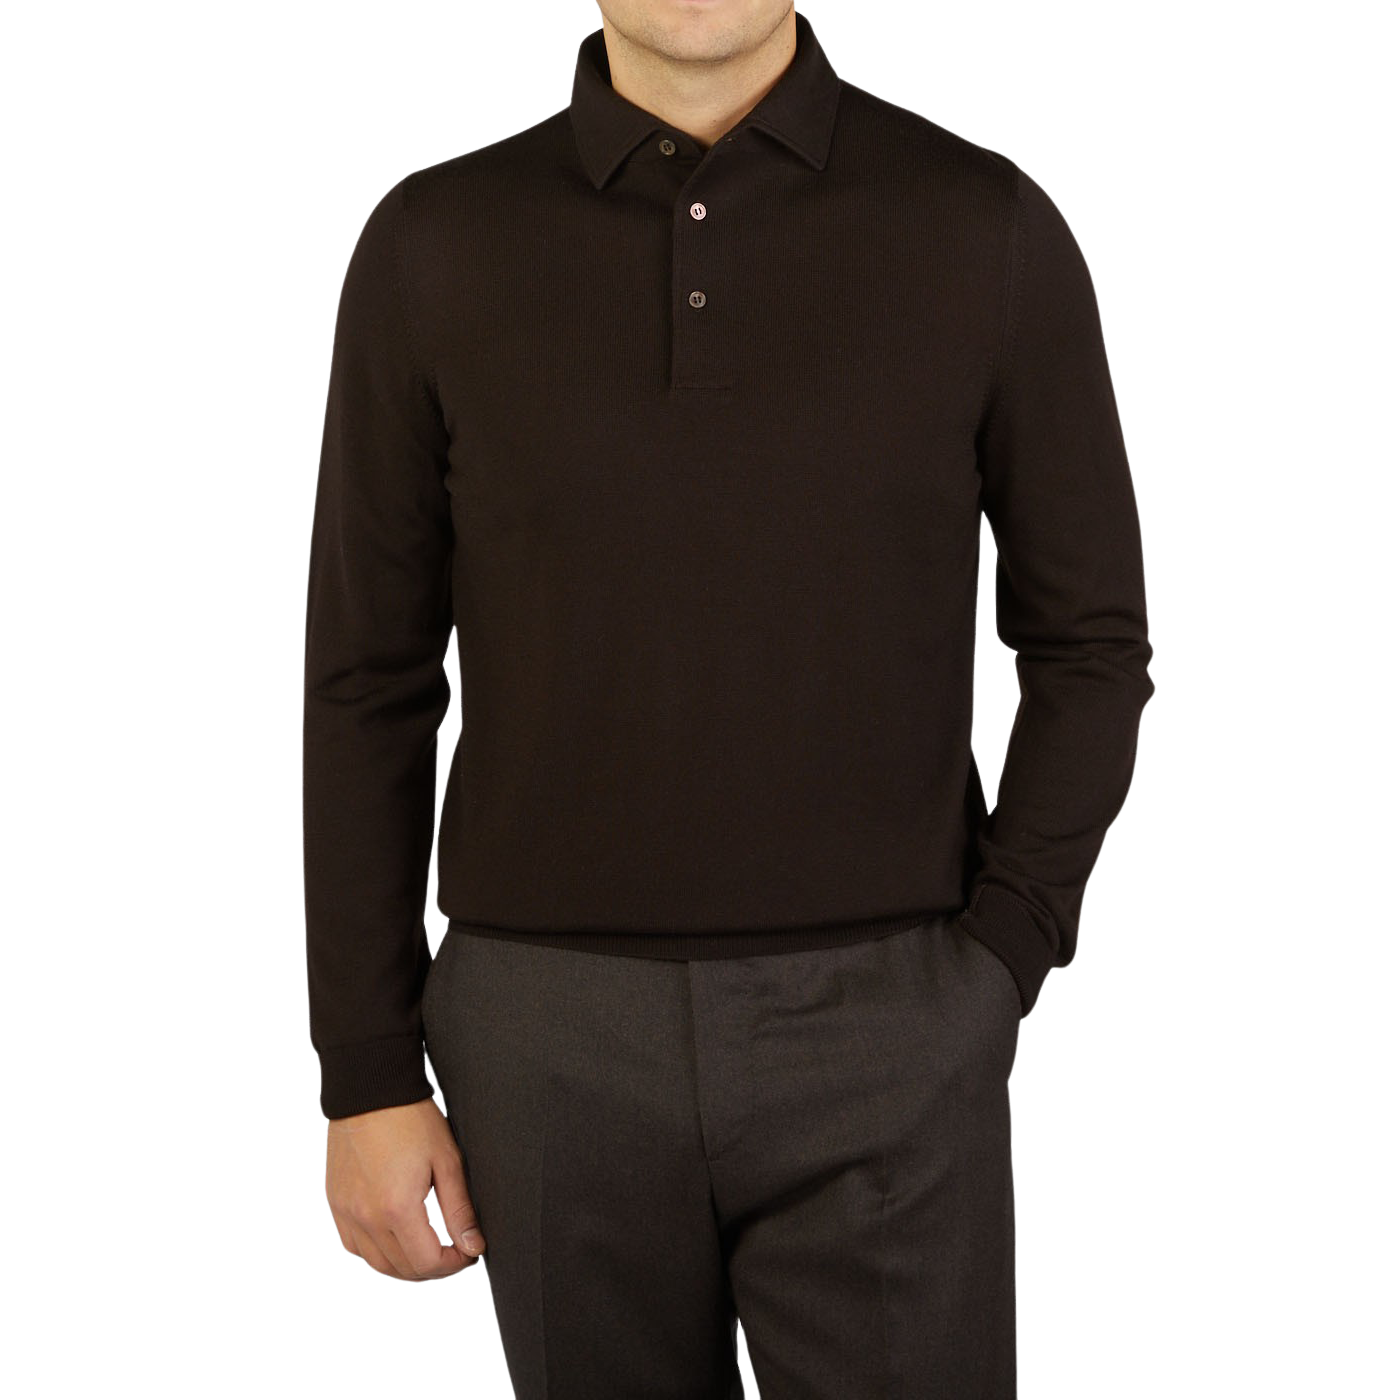 A man wearing a dark Brown Merino Wool One-Piece Collar Gran Sasso polo shirt.